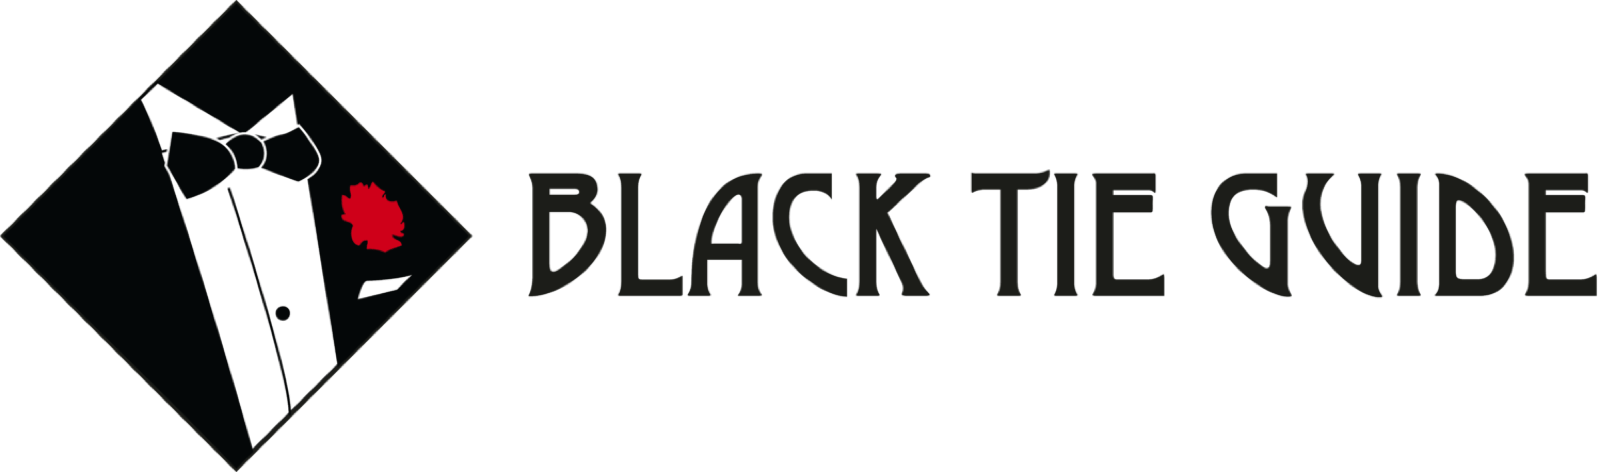 Black Tie Guide logo